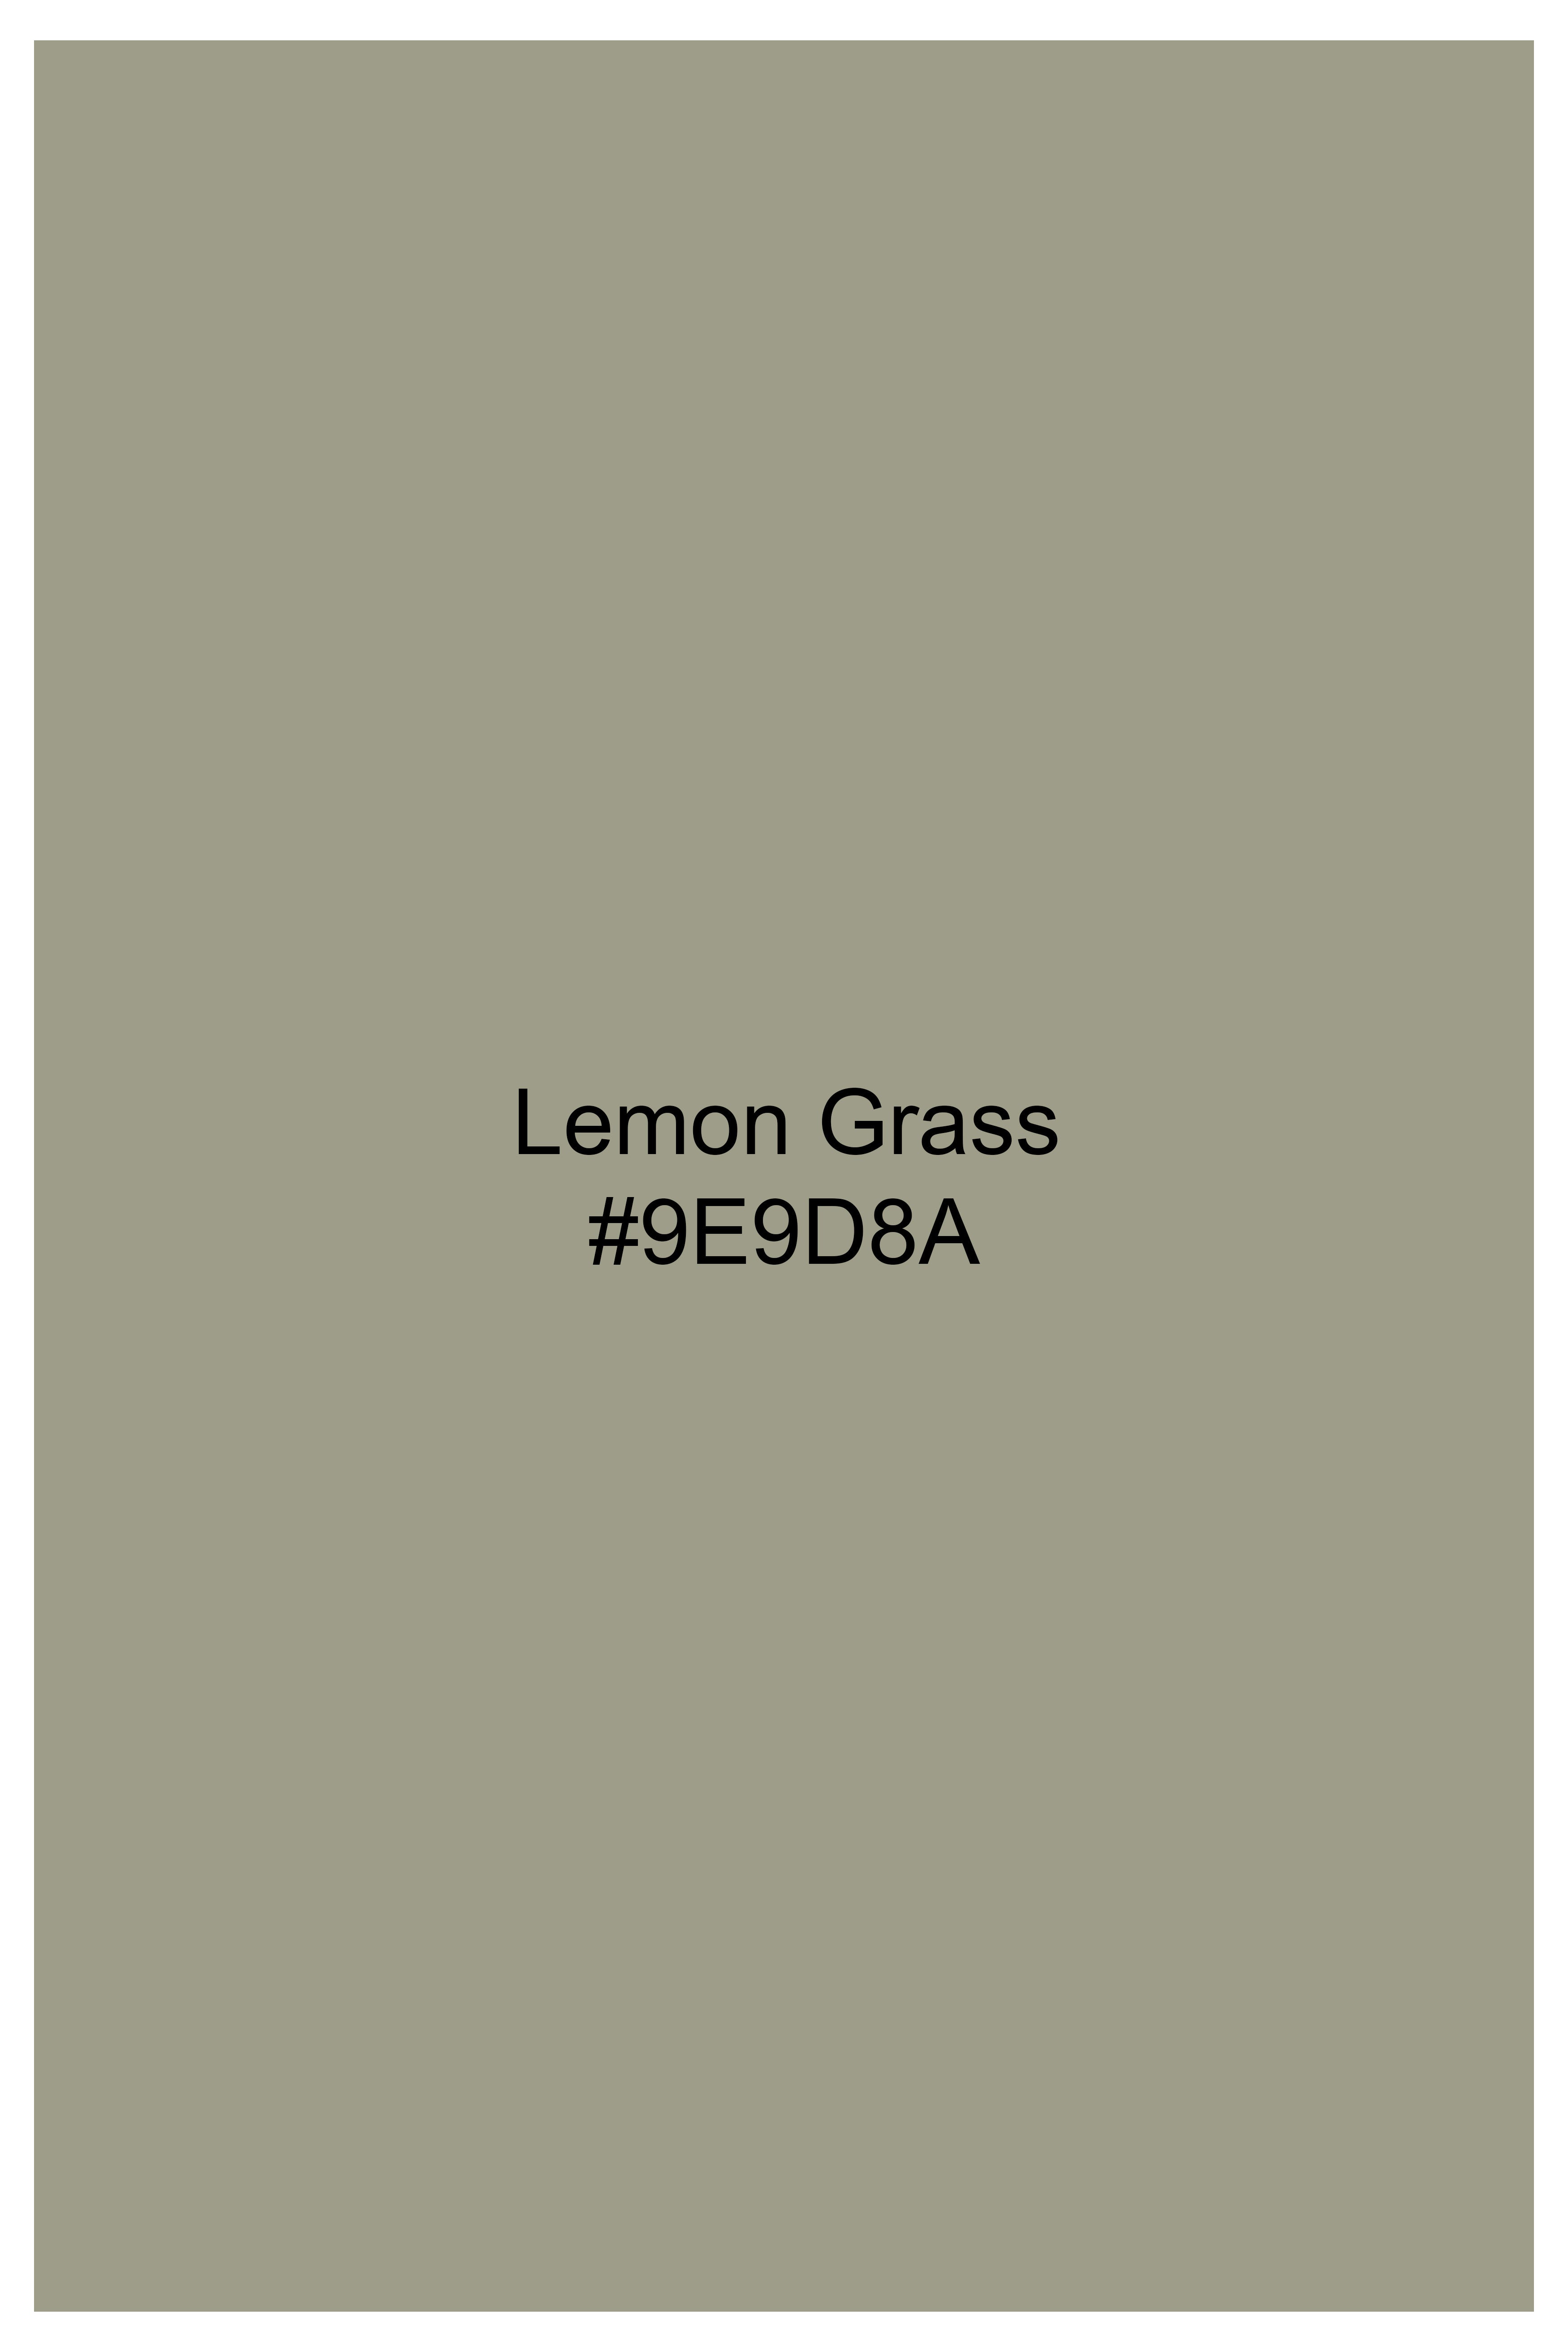 Lemon Grass Green Premium Cotton Cross Buttoned Bandhgala Suit ST3099-CBG-36, ST3099-CBG-38, ST3099-CBG-40, ST3099-CBG-42, ST3099-CBG-44, ST3099-CBG-46, ST3099-CBG-48, ST3099-CBG-50, ST3099-CBG-52, ST3099-CBG-54, ST3099-CBG-56, ST3099-CBG-58, ST3099-CBG-60